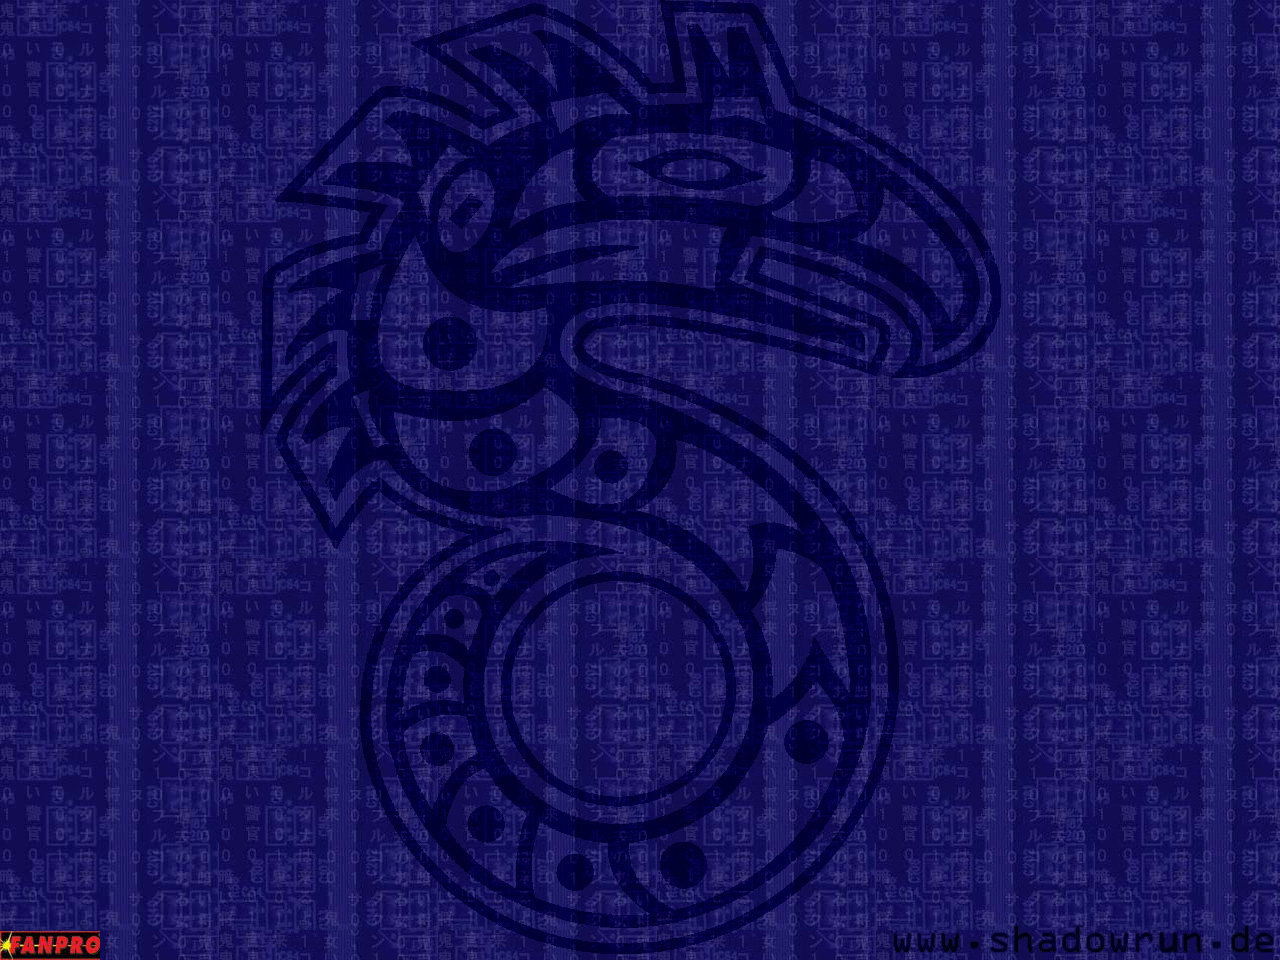  dragon logo shadowrun wallpaper dragon logo wallpaper dragon logojpg 1280x960